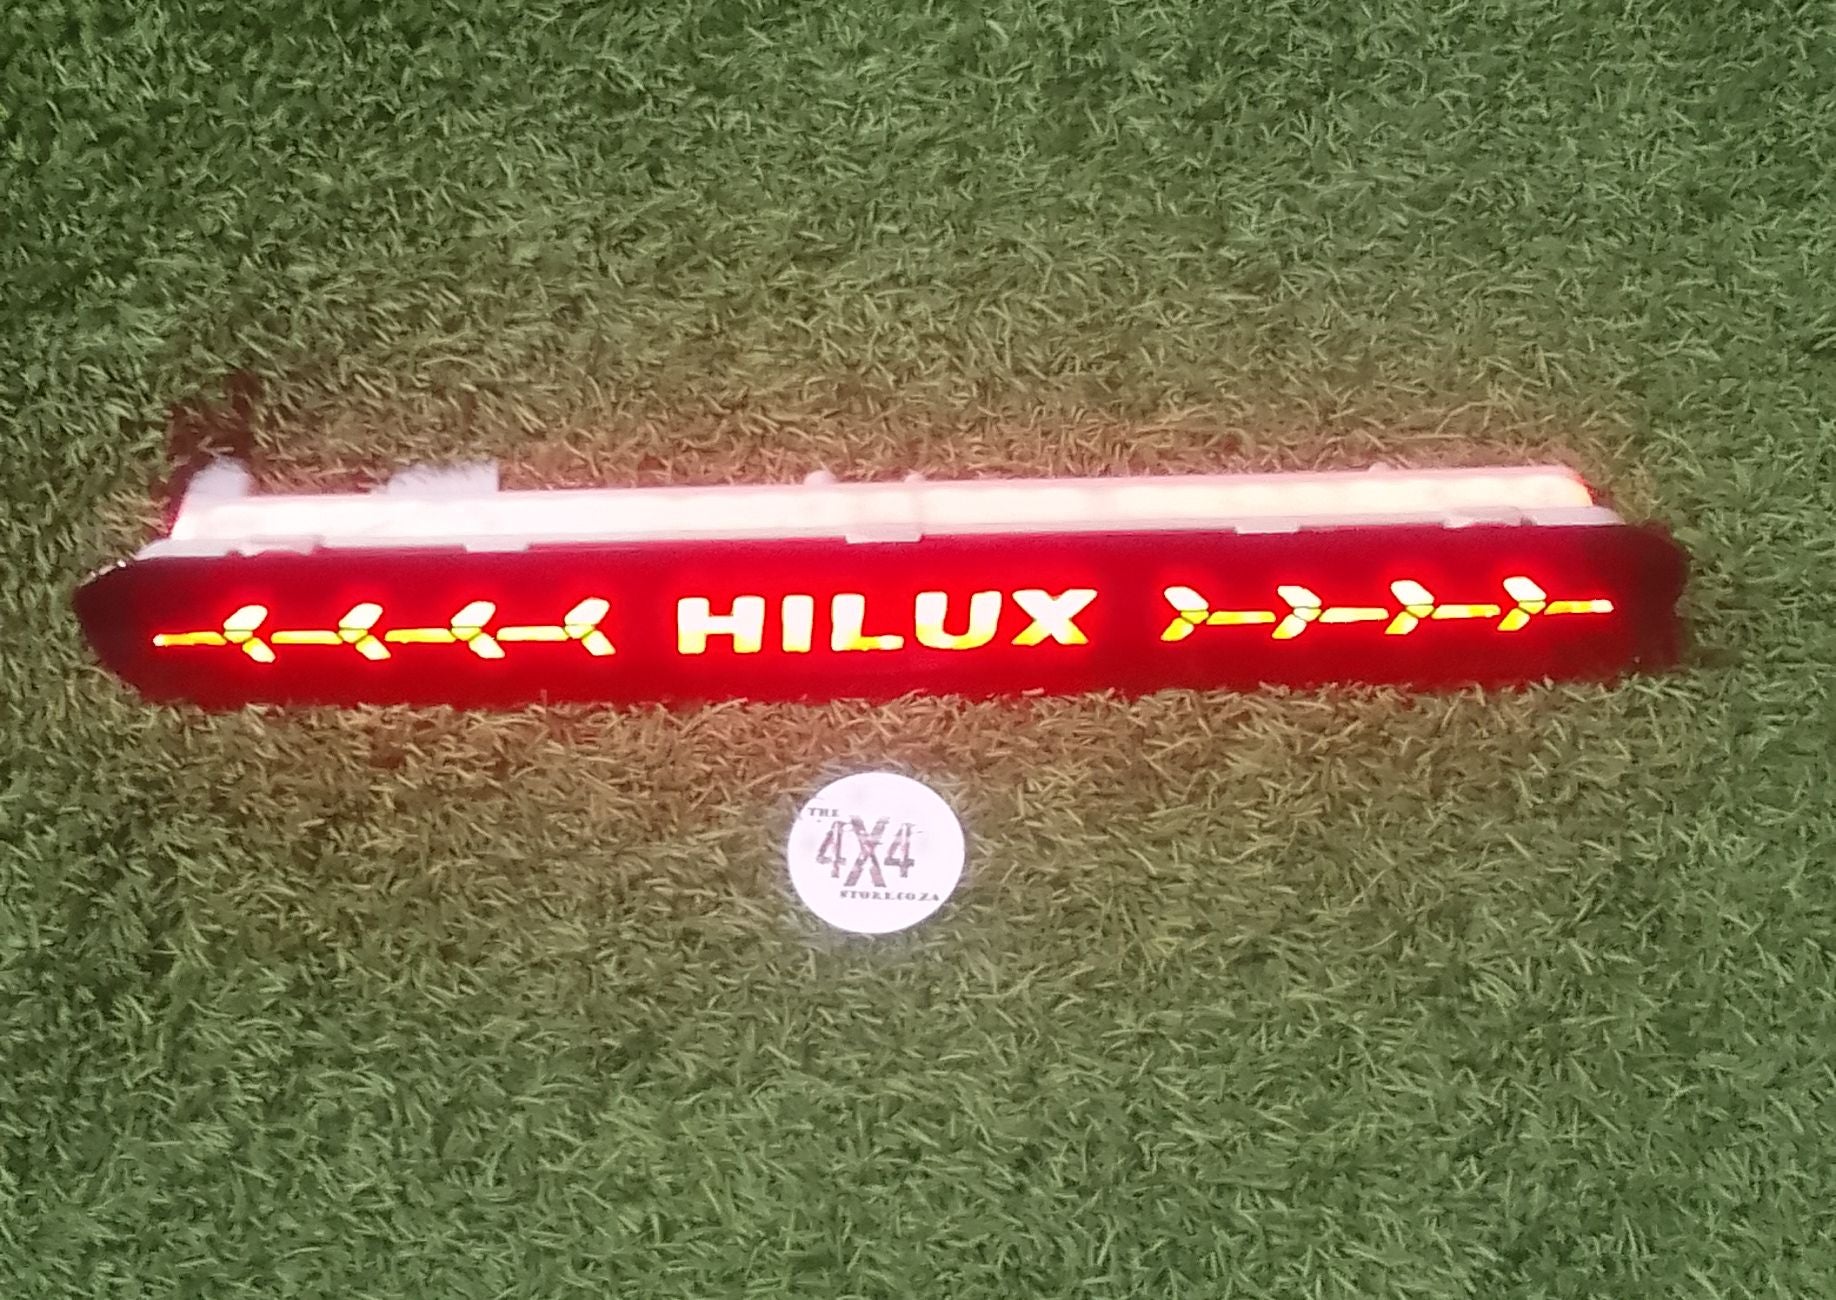 Toyota Hilux 2016 LED Tailgate brake light (Red "HILUX" Logo)